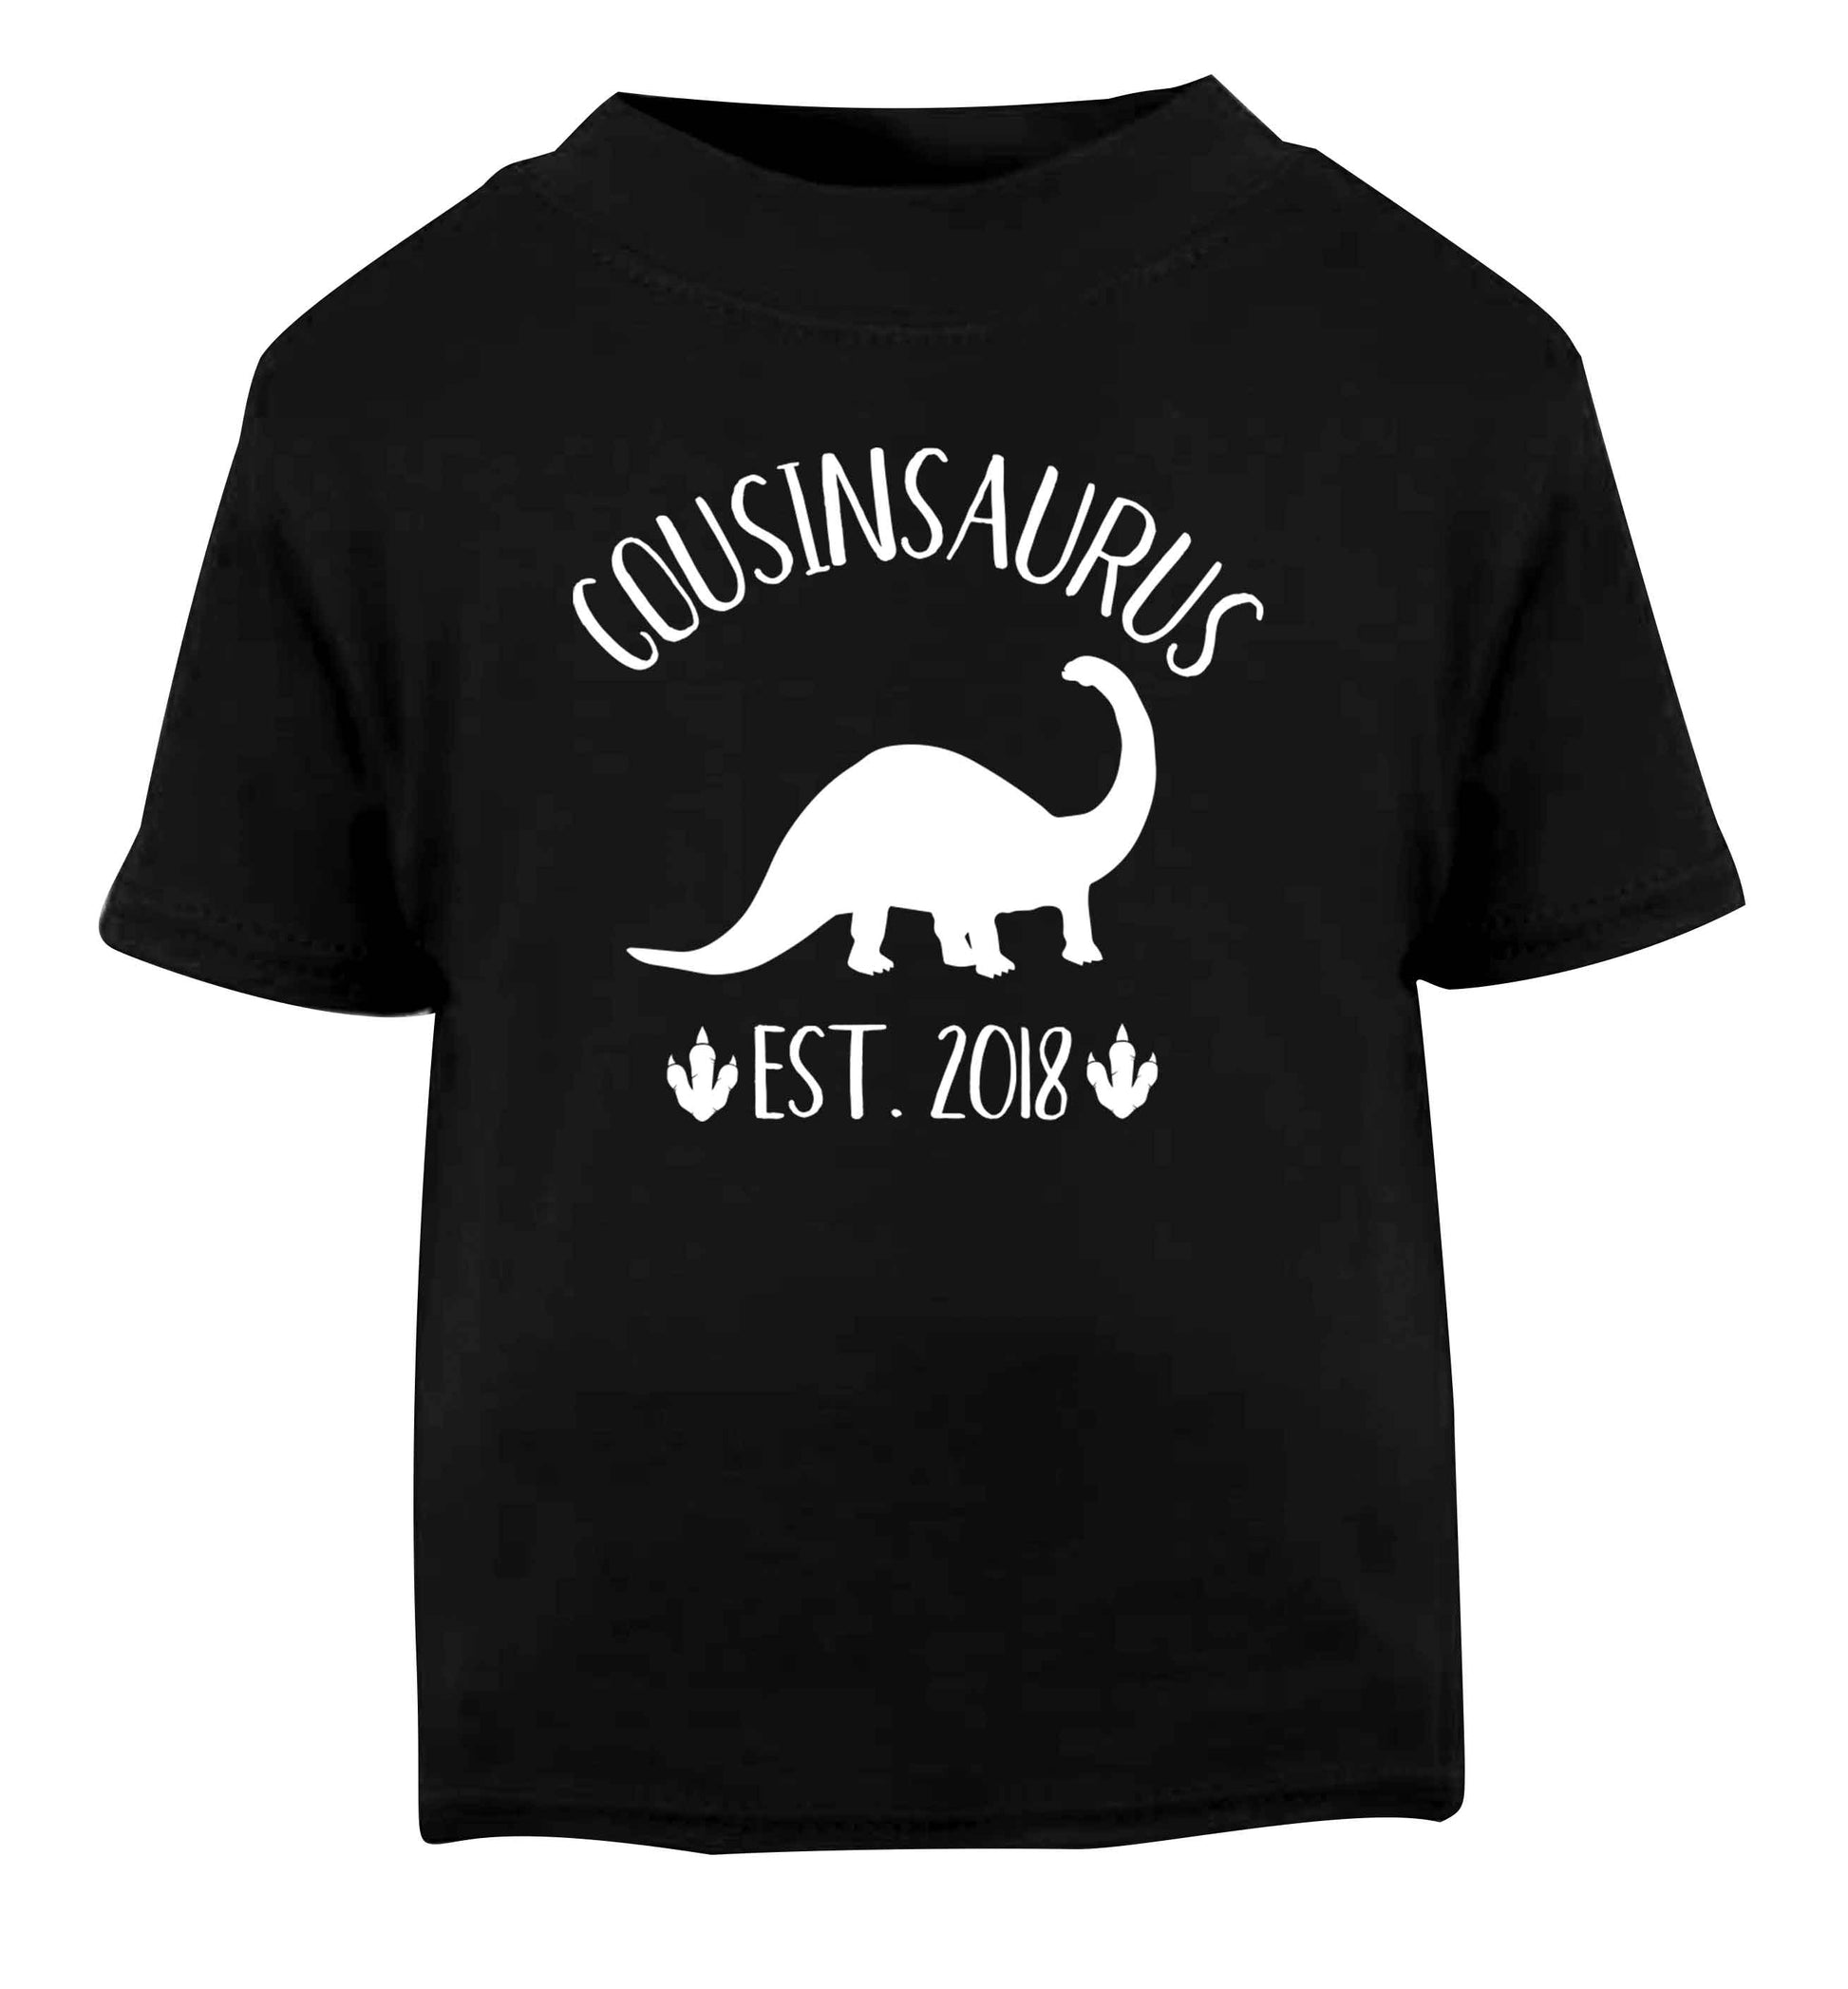 Personalised cousinsaurus since (custom date) Black Baby Toddler Tshirt 2 years